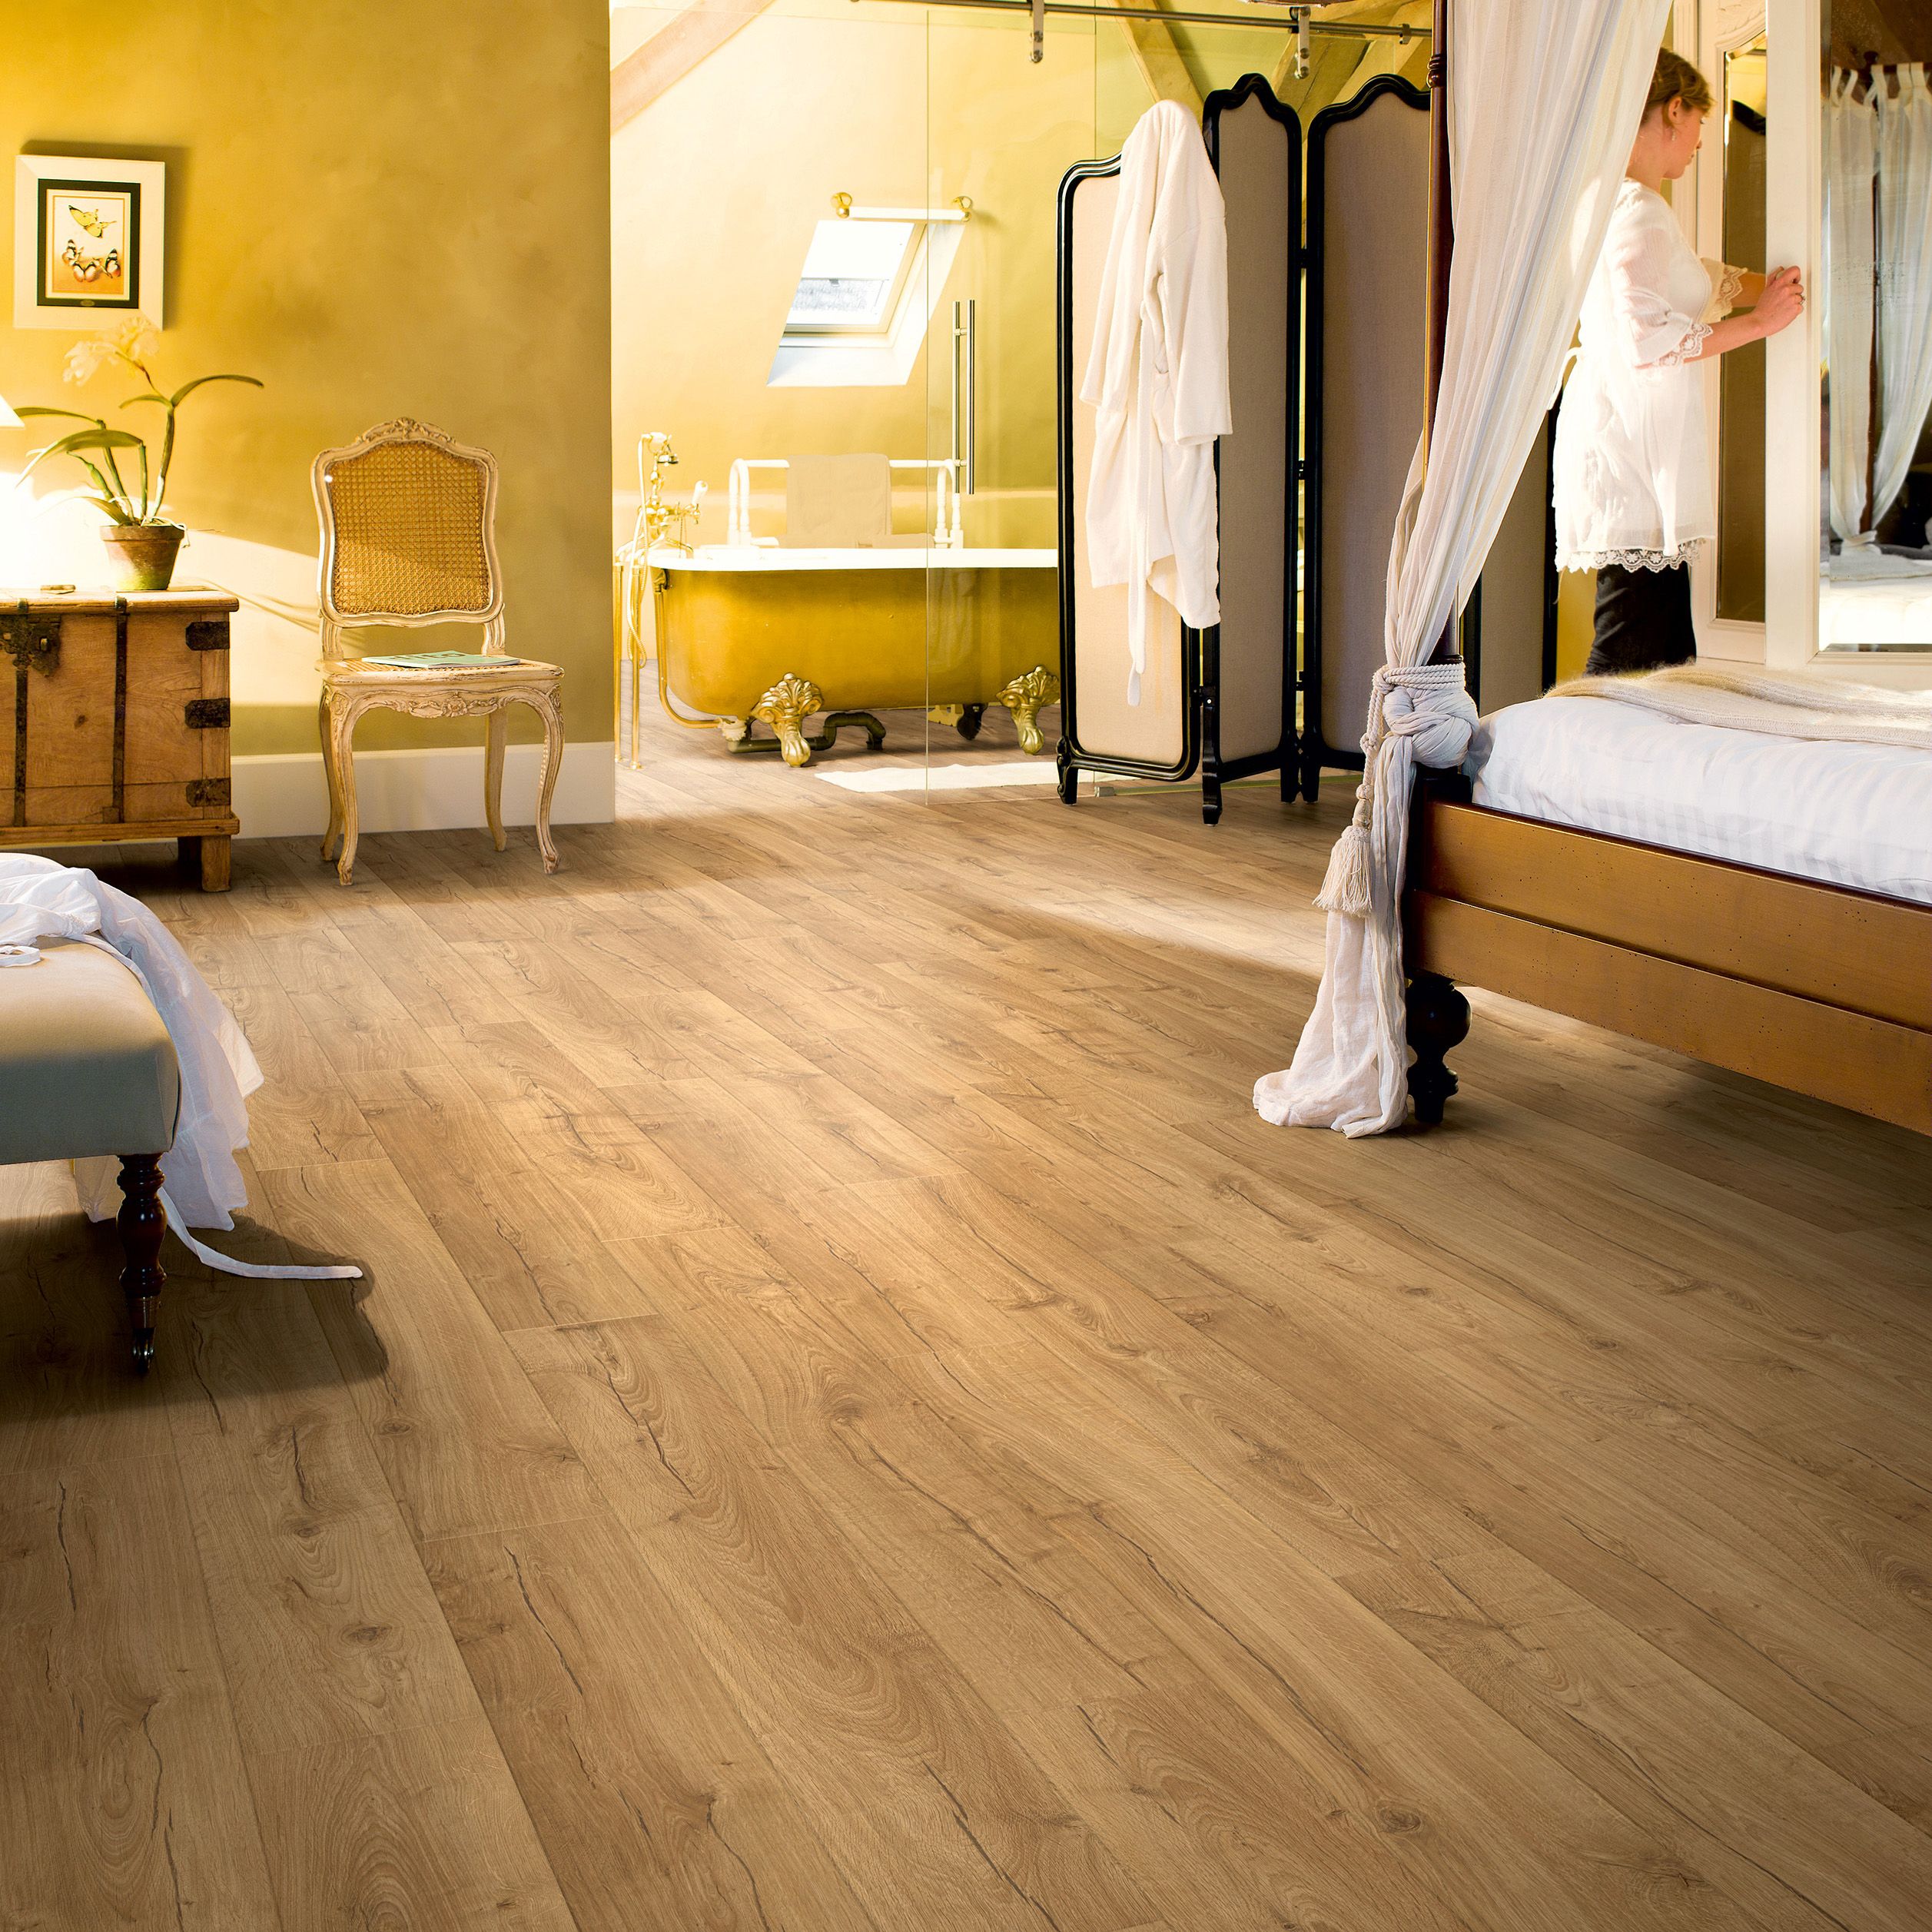 Aquanto Classic Natural Oak effect Laminate Flooring Sample